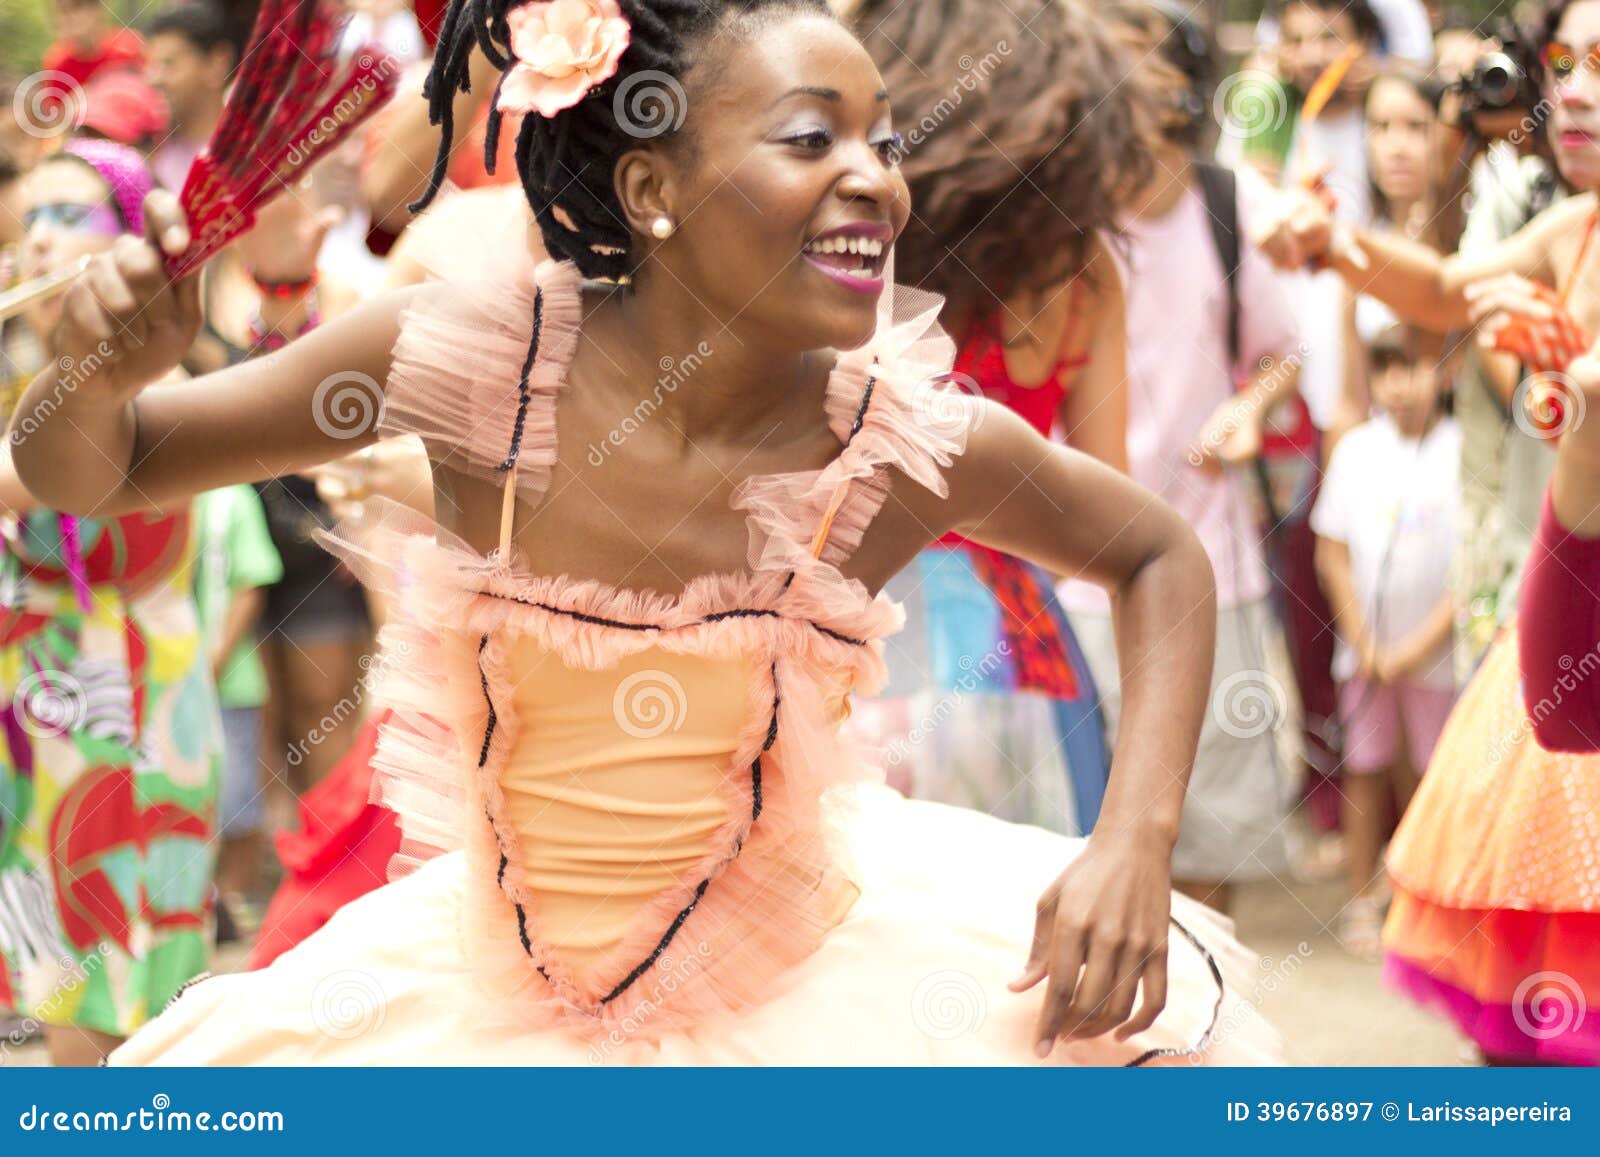 She ride like a carnival. Бразилия Ламбада. Танец carimbo в Бразилии. Танец индейцев каримбо. Кубинская женщина танцует.